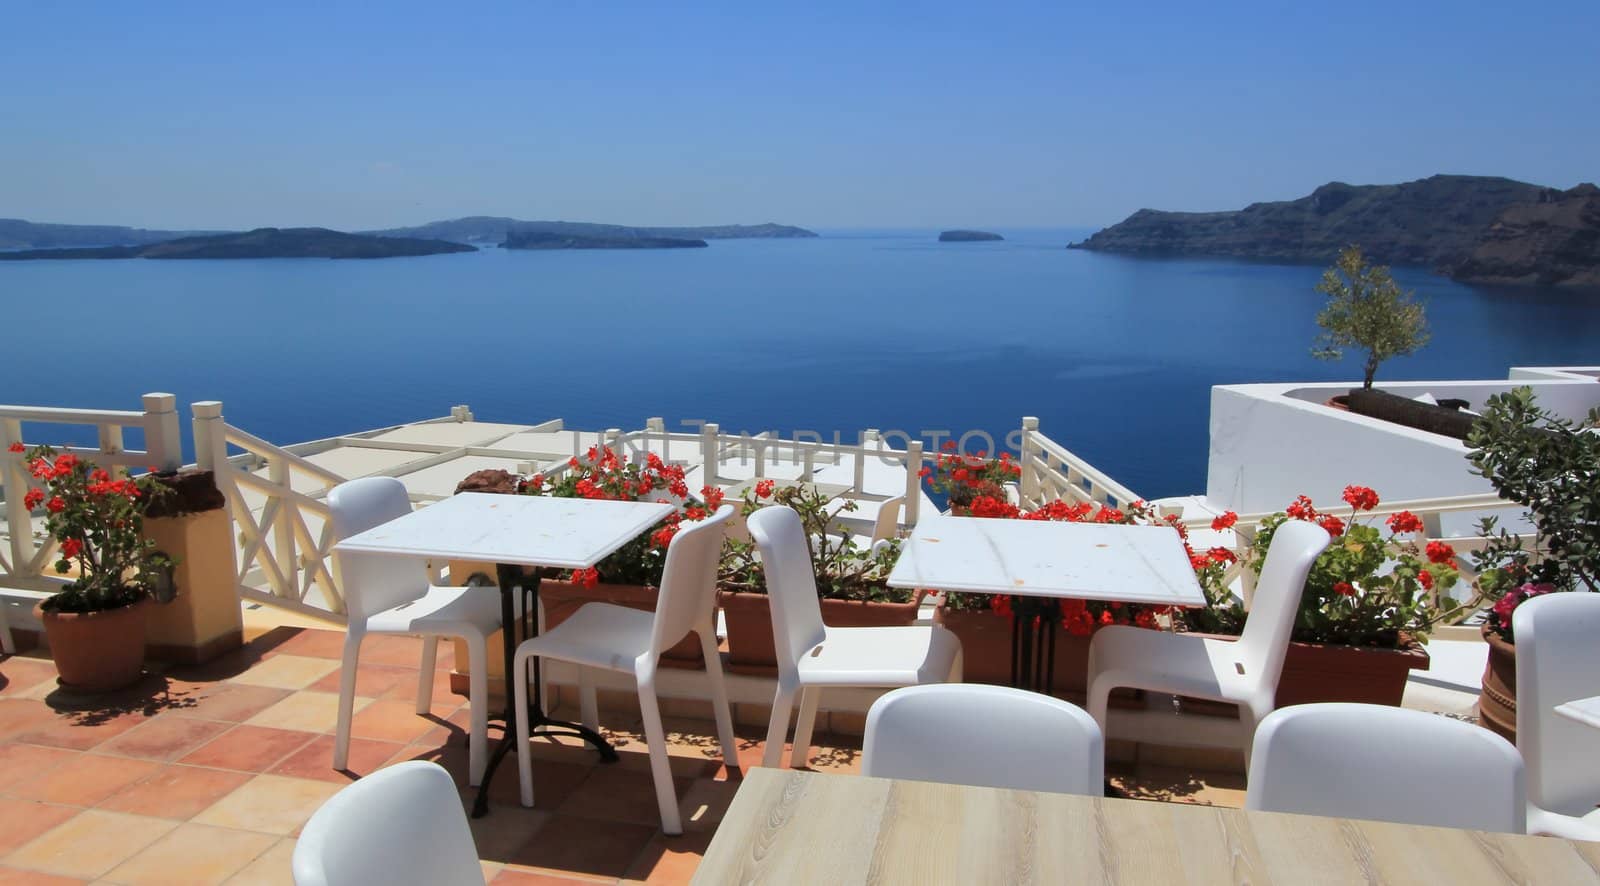 Restaurant balcony and aegean sea, Santorini, Greece by Elenaphotos21